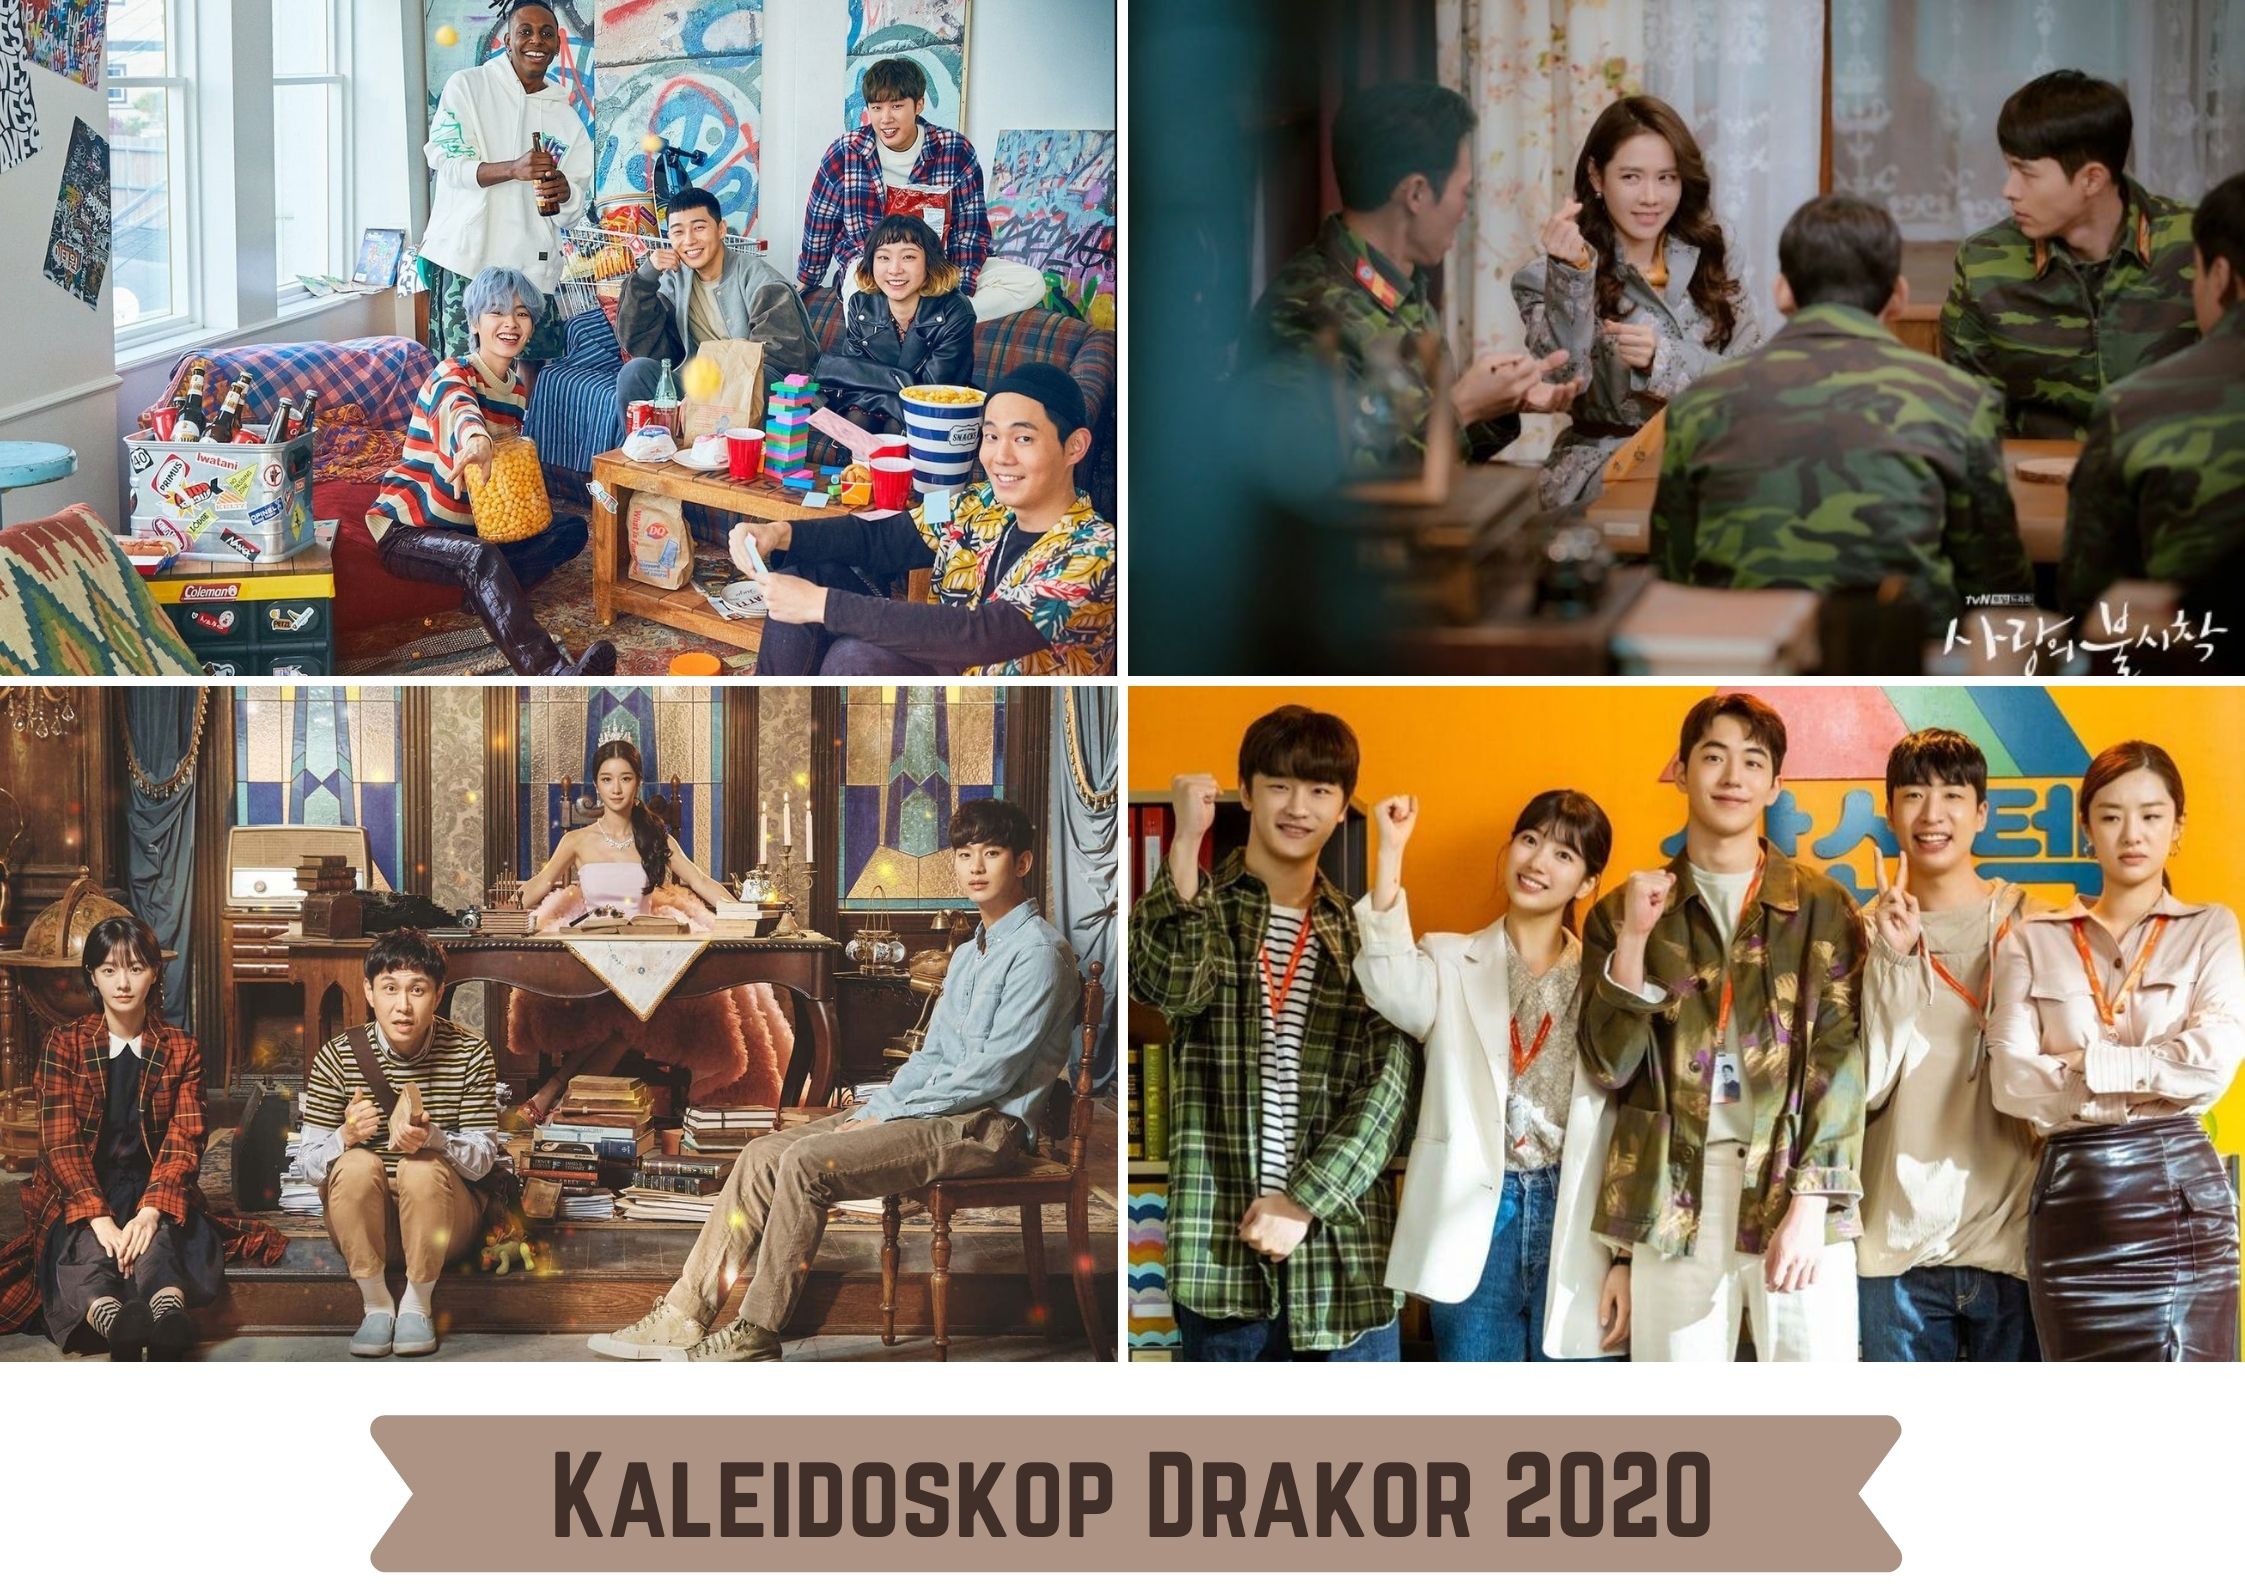 Kaleidoskop Drakor 2020 ala Drakor Class